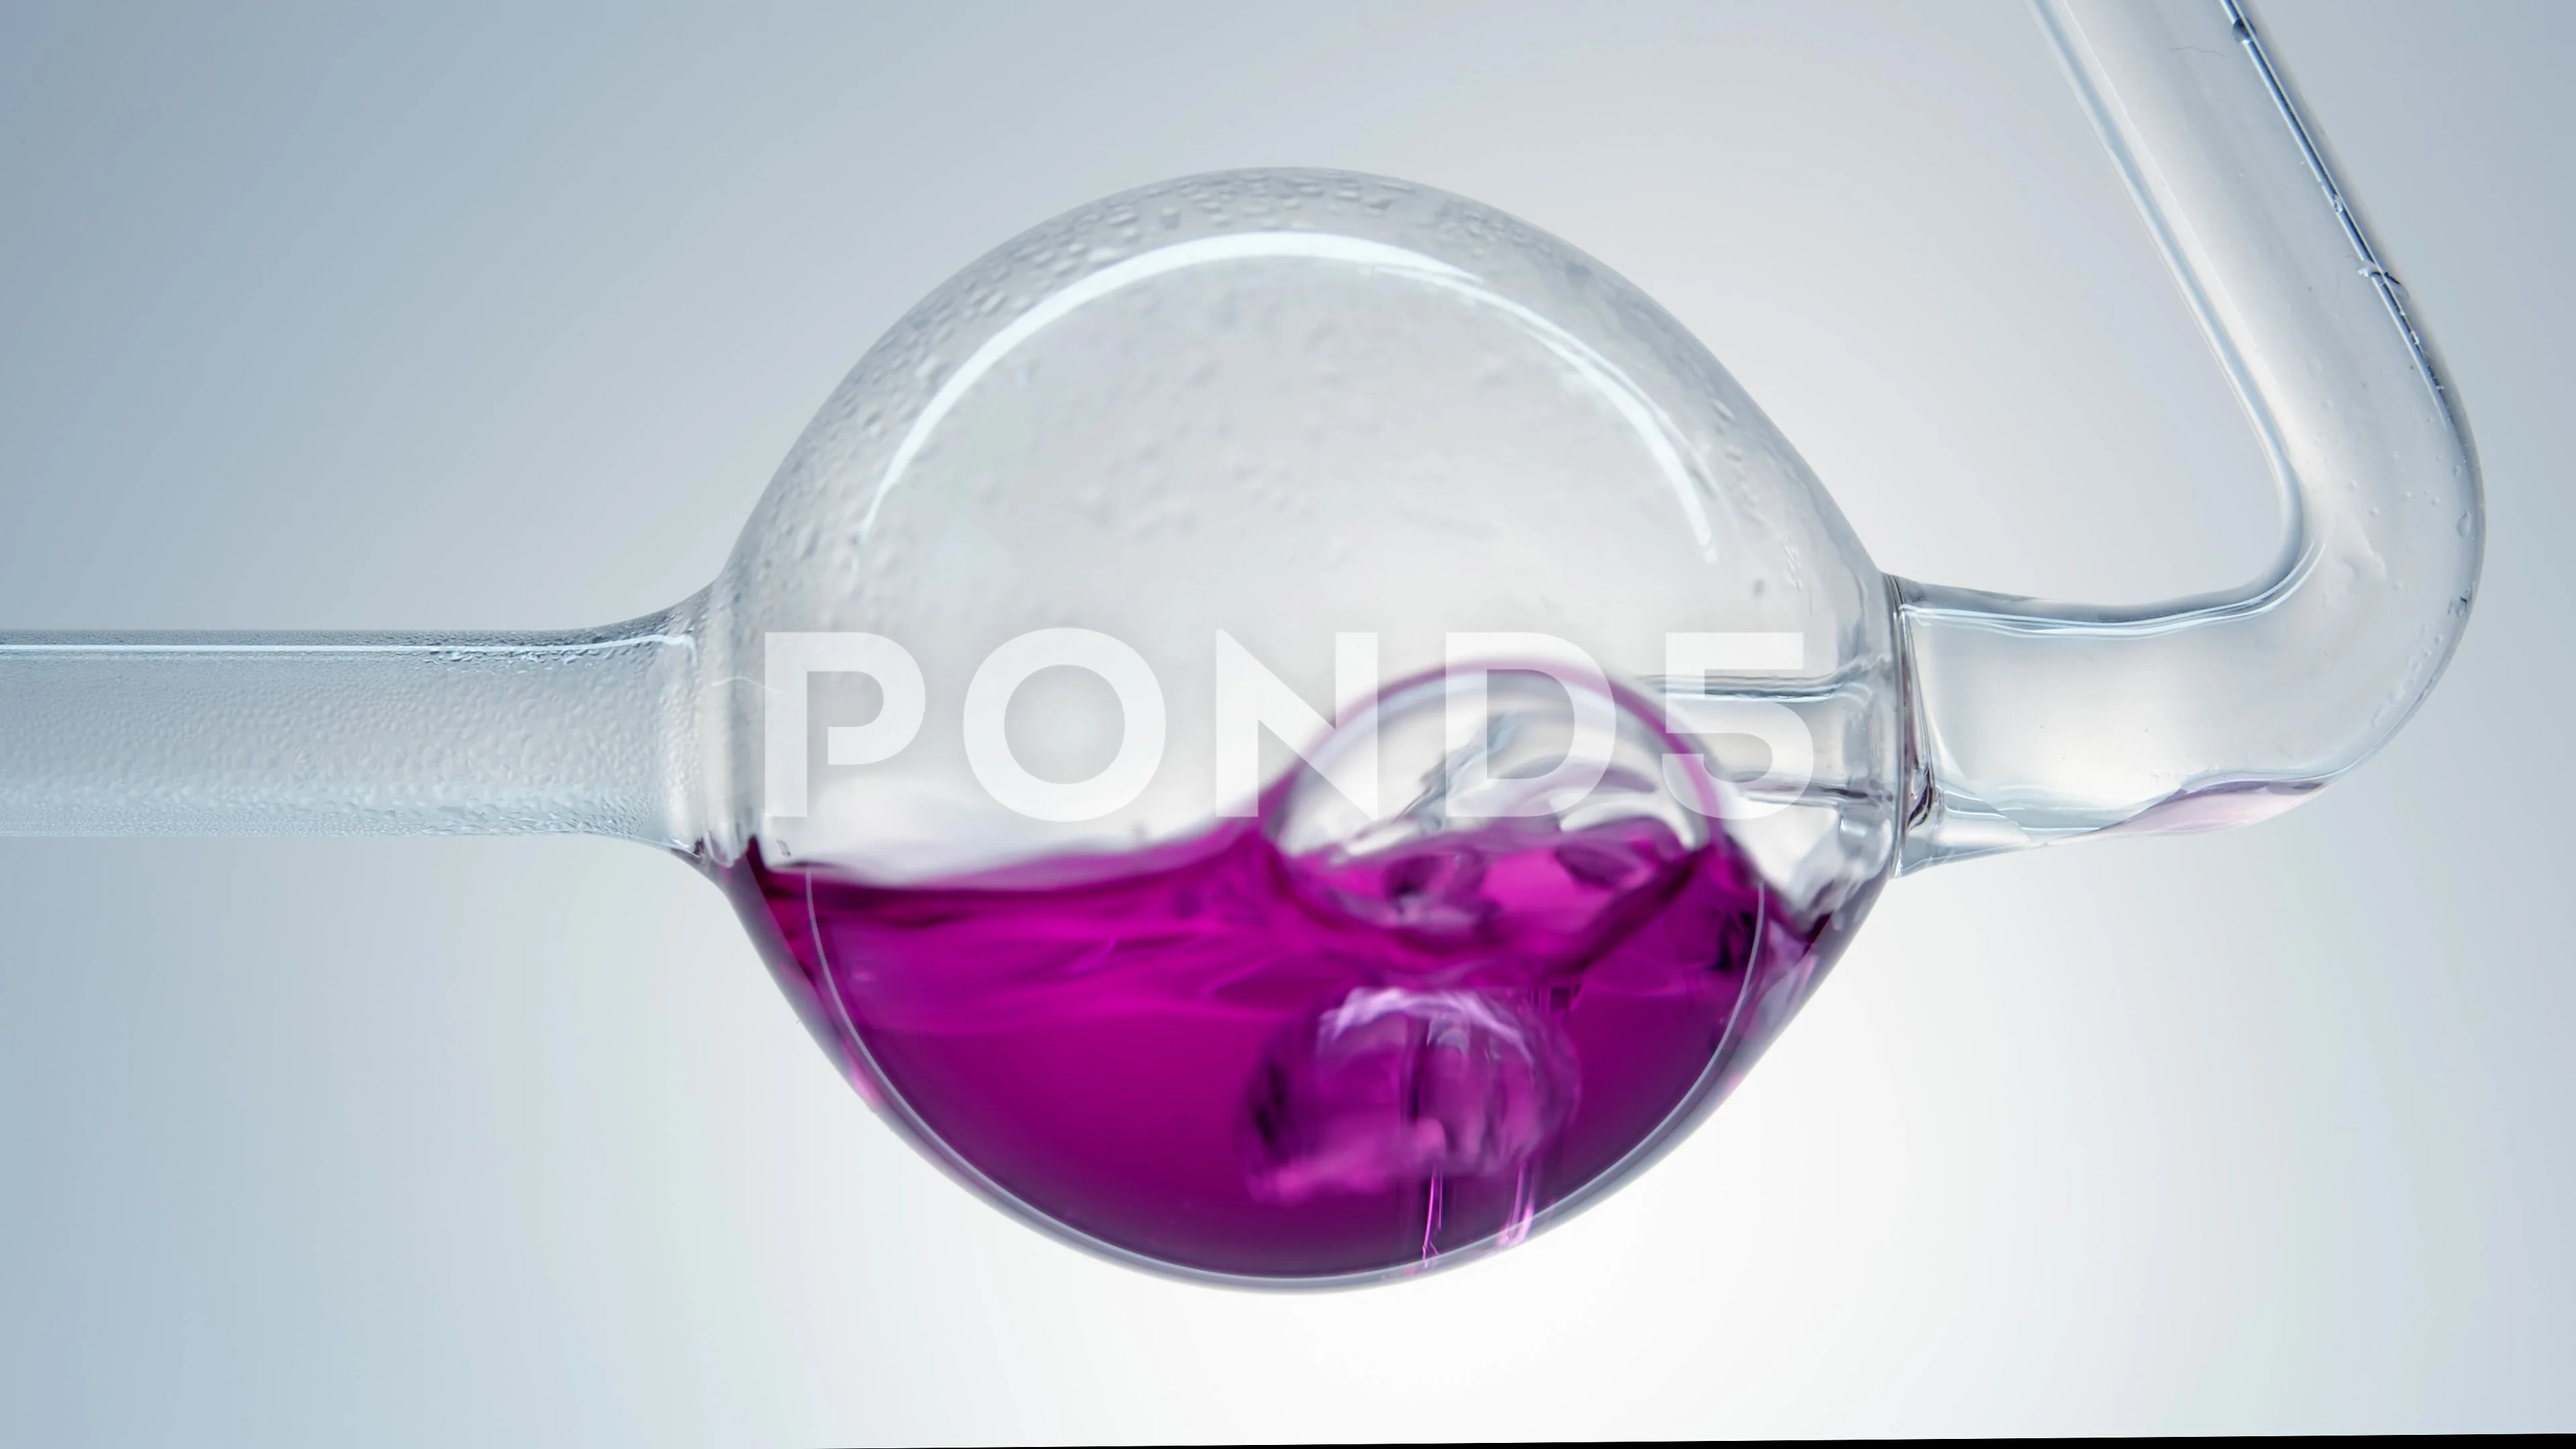 https://images.pond5.com/pink-liquid-glass-flask-footage-238780280_prevstill.jpeg